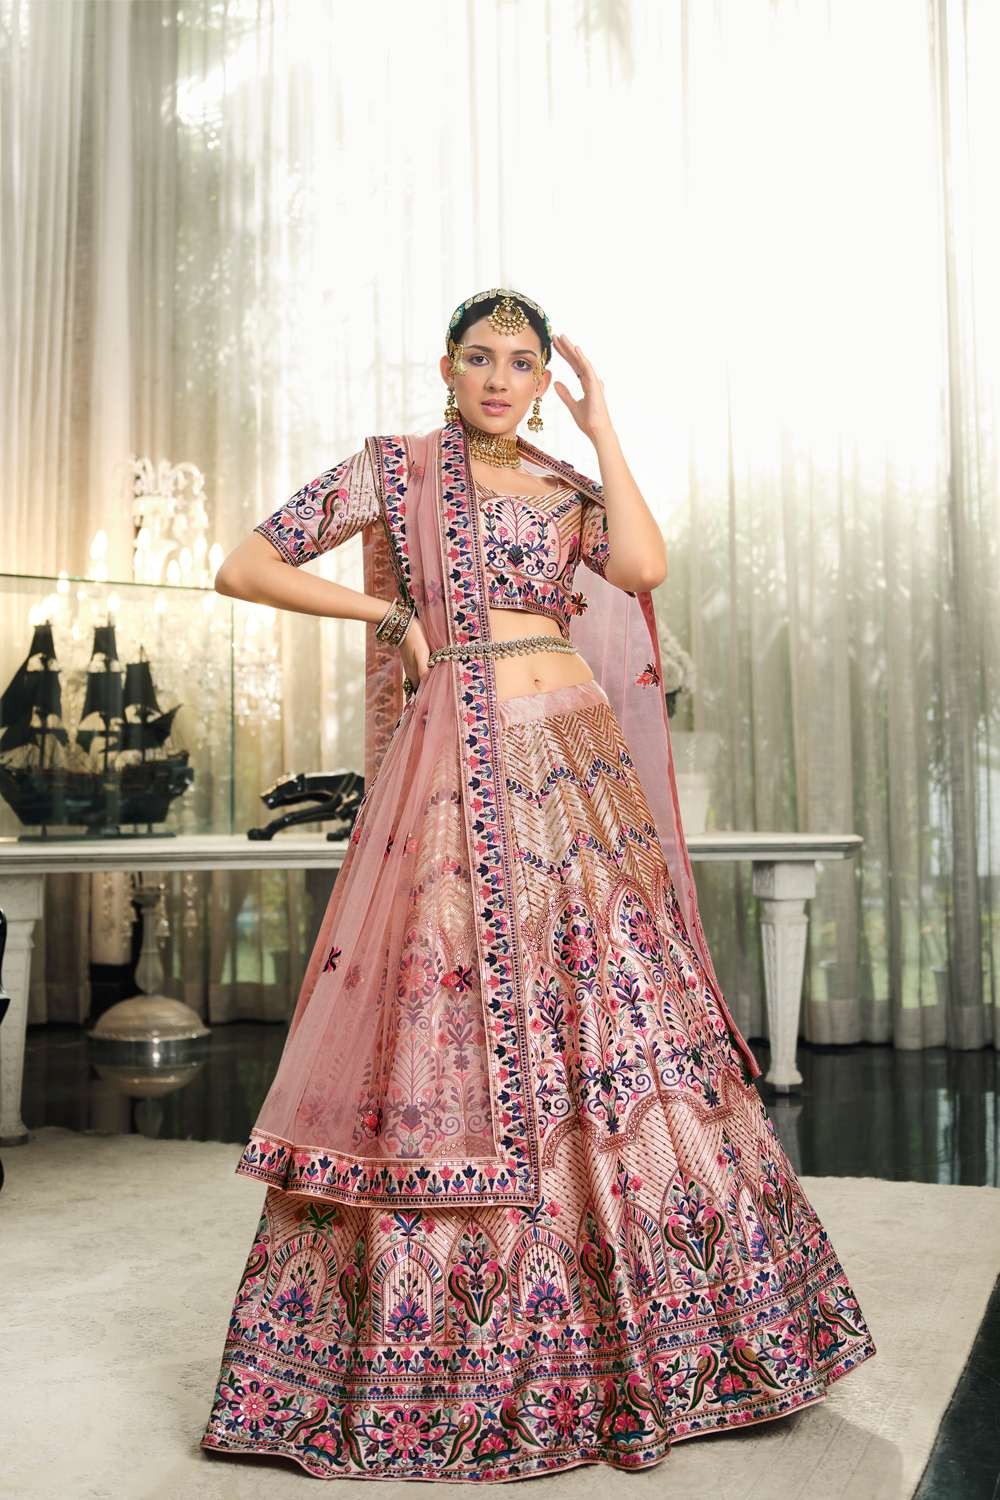 Rani Pink Embroidered Silk Bridal Lehenga Choli